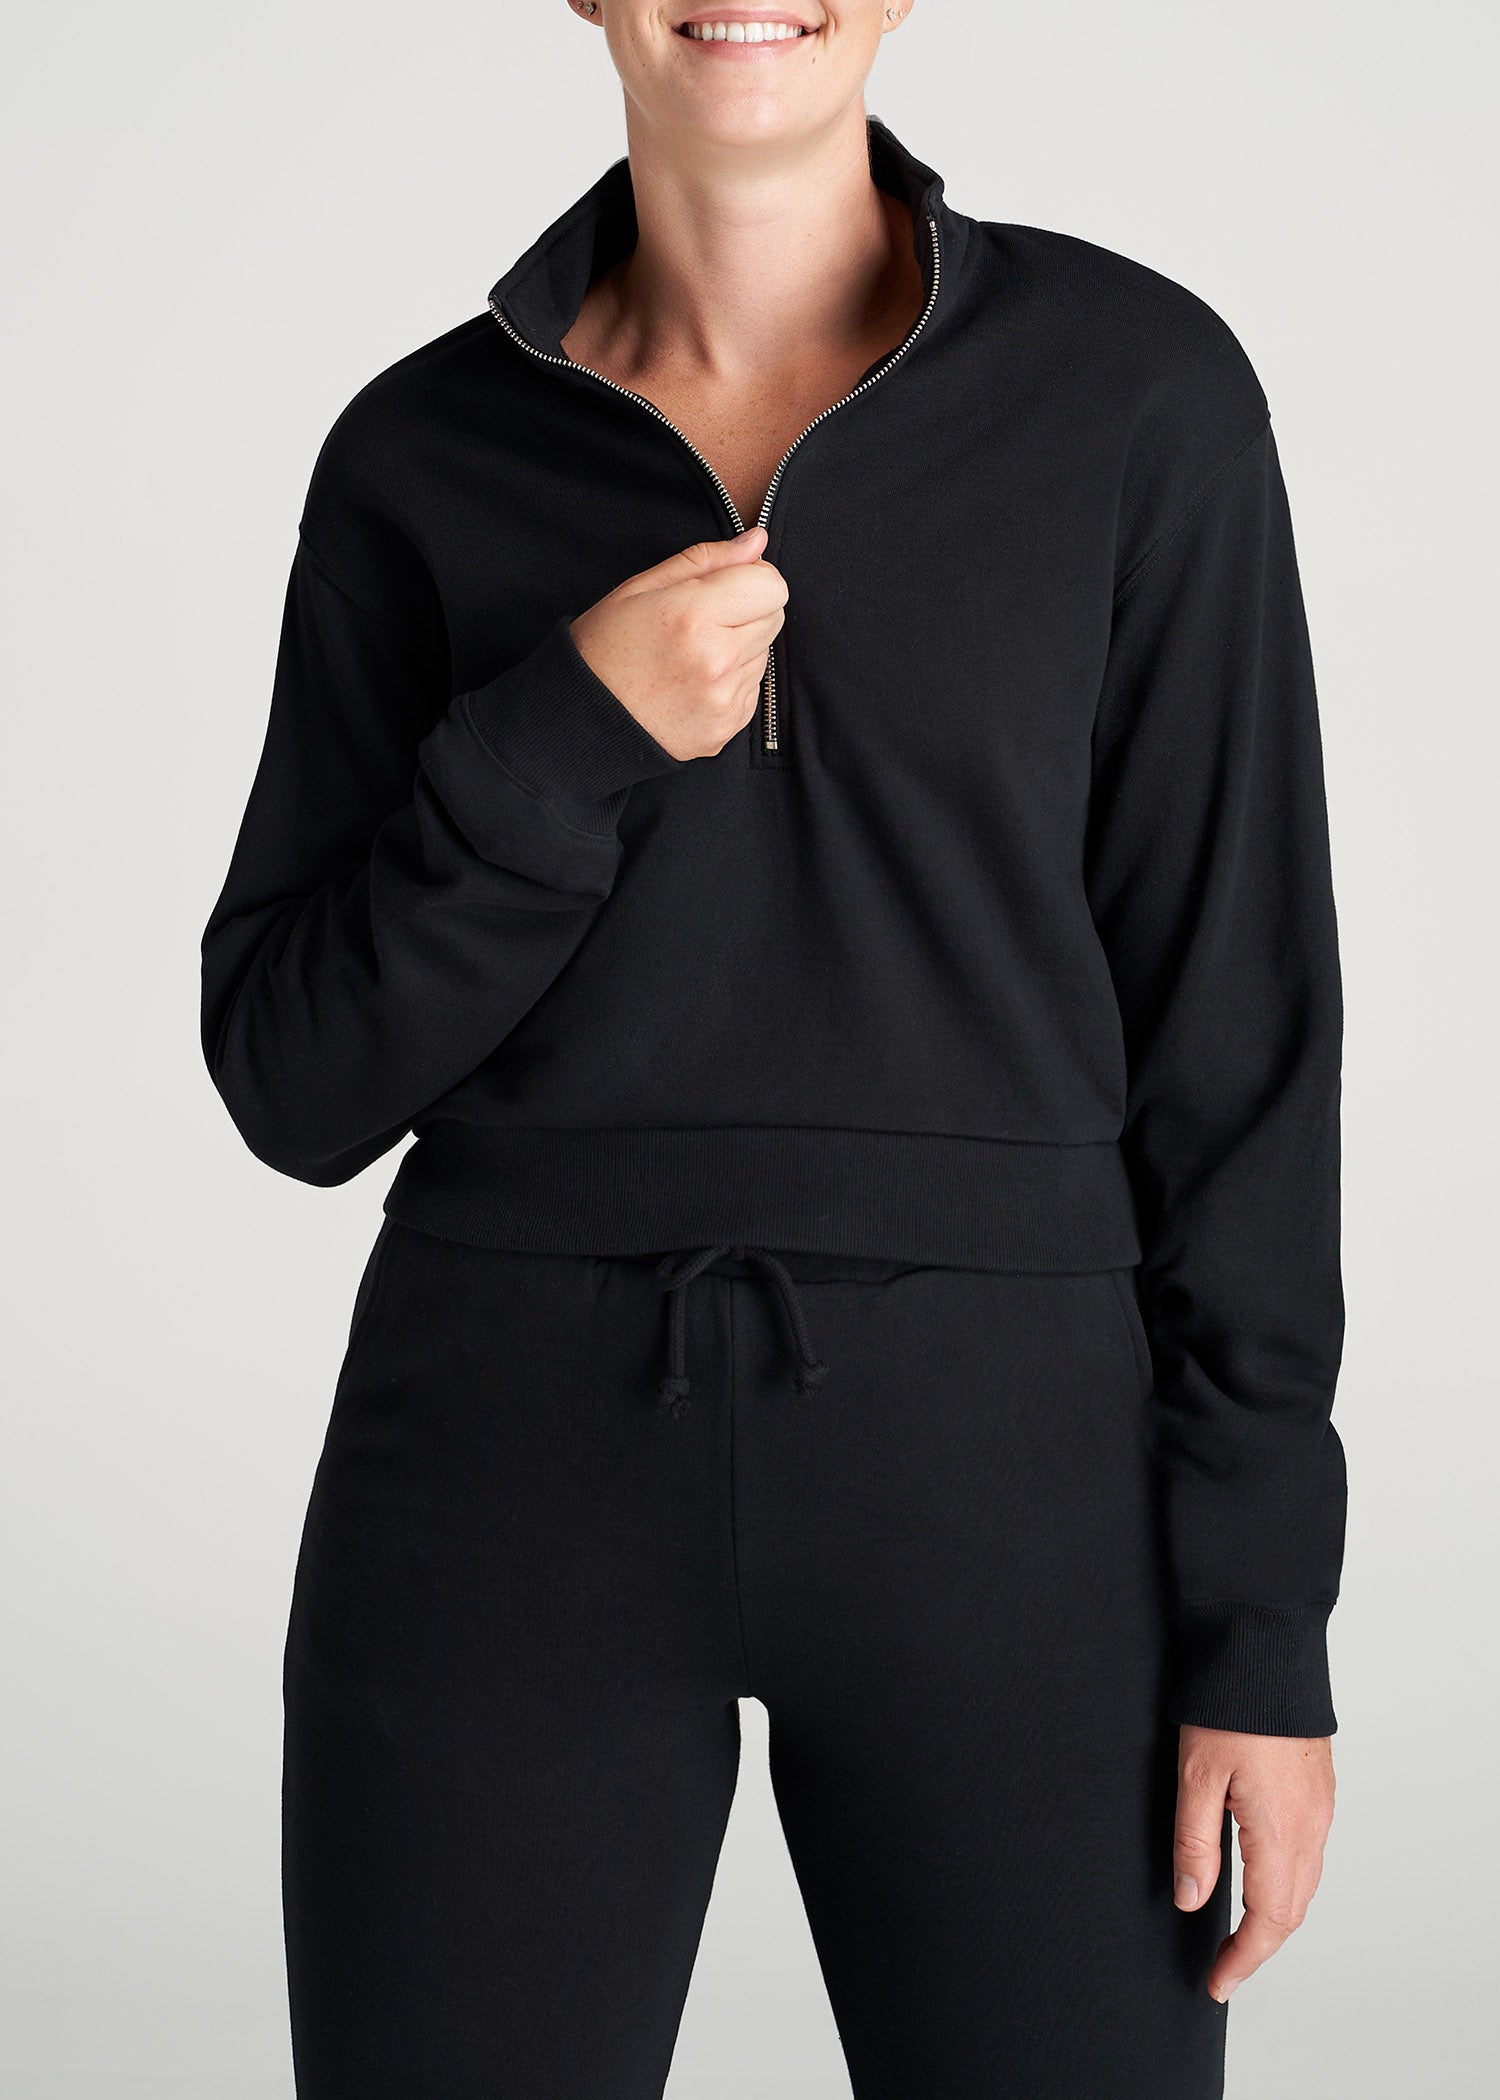 Wearever Fleece Cropped Half-Zip Sweatshirt for Tall Women in Black